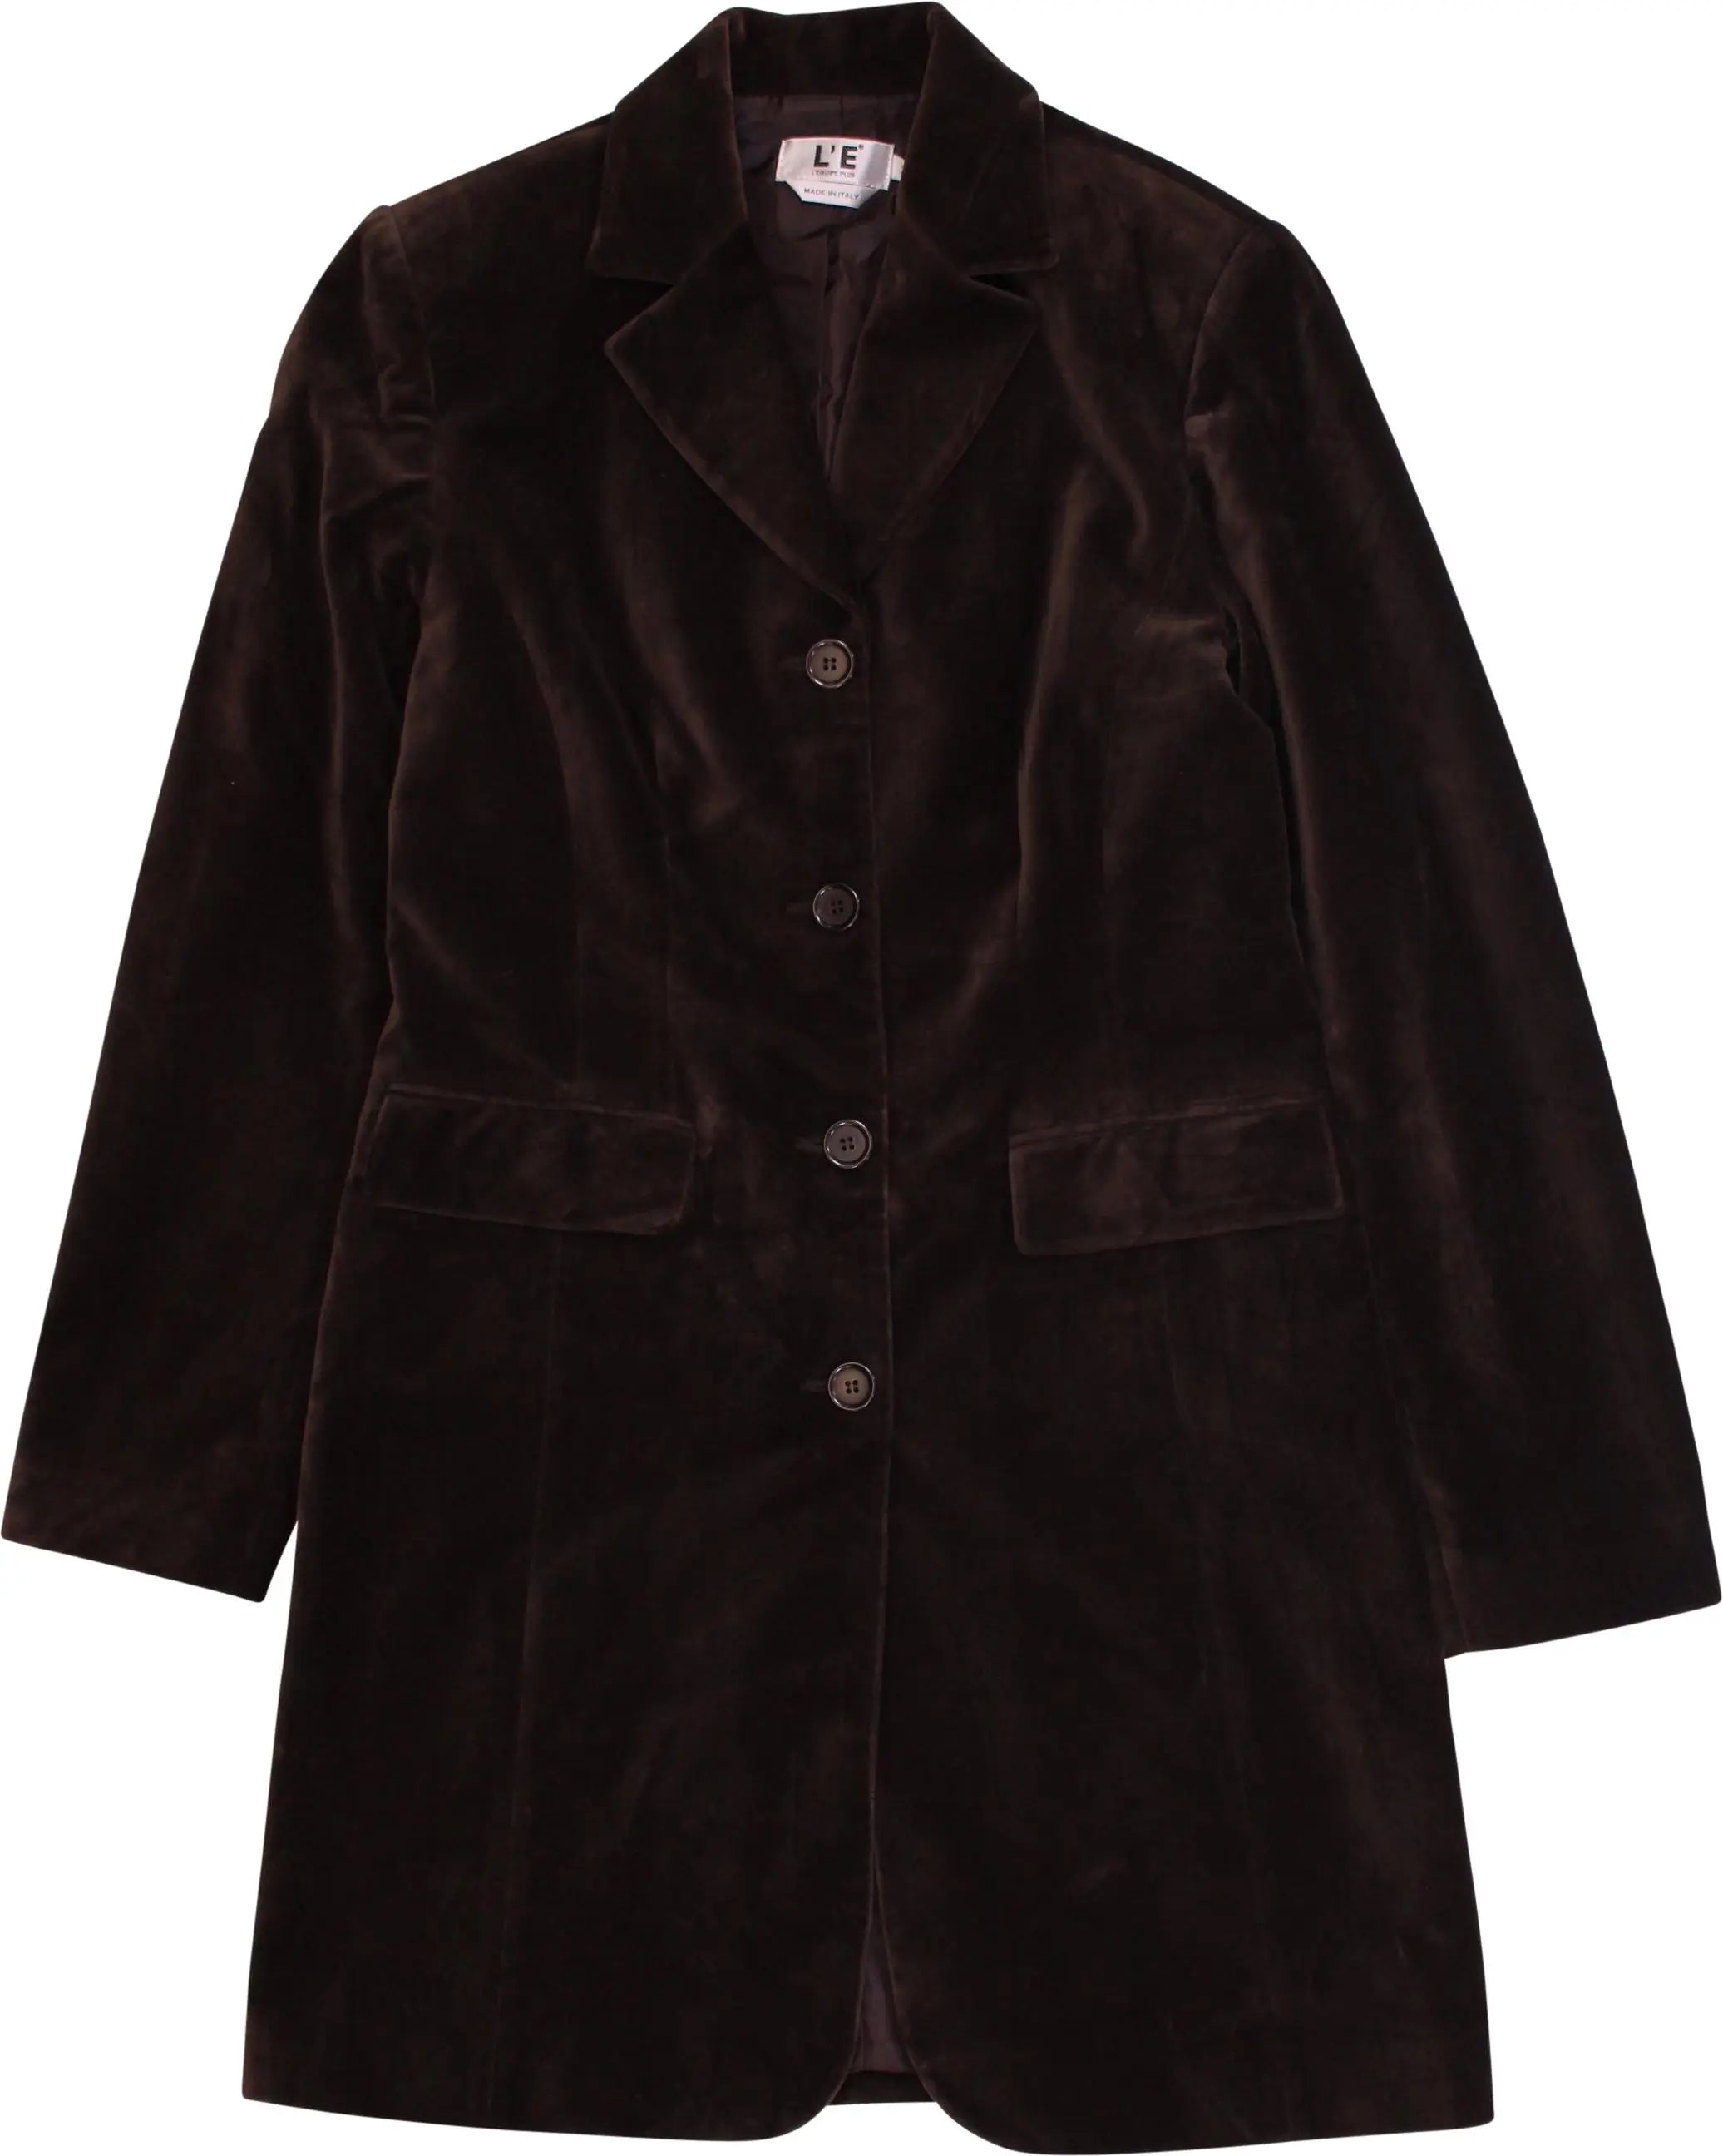 L'Equipe Plus - Brown Long Velvet Blazer- ThriftTale.com - Vintage and second handclothing